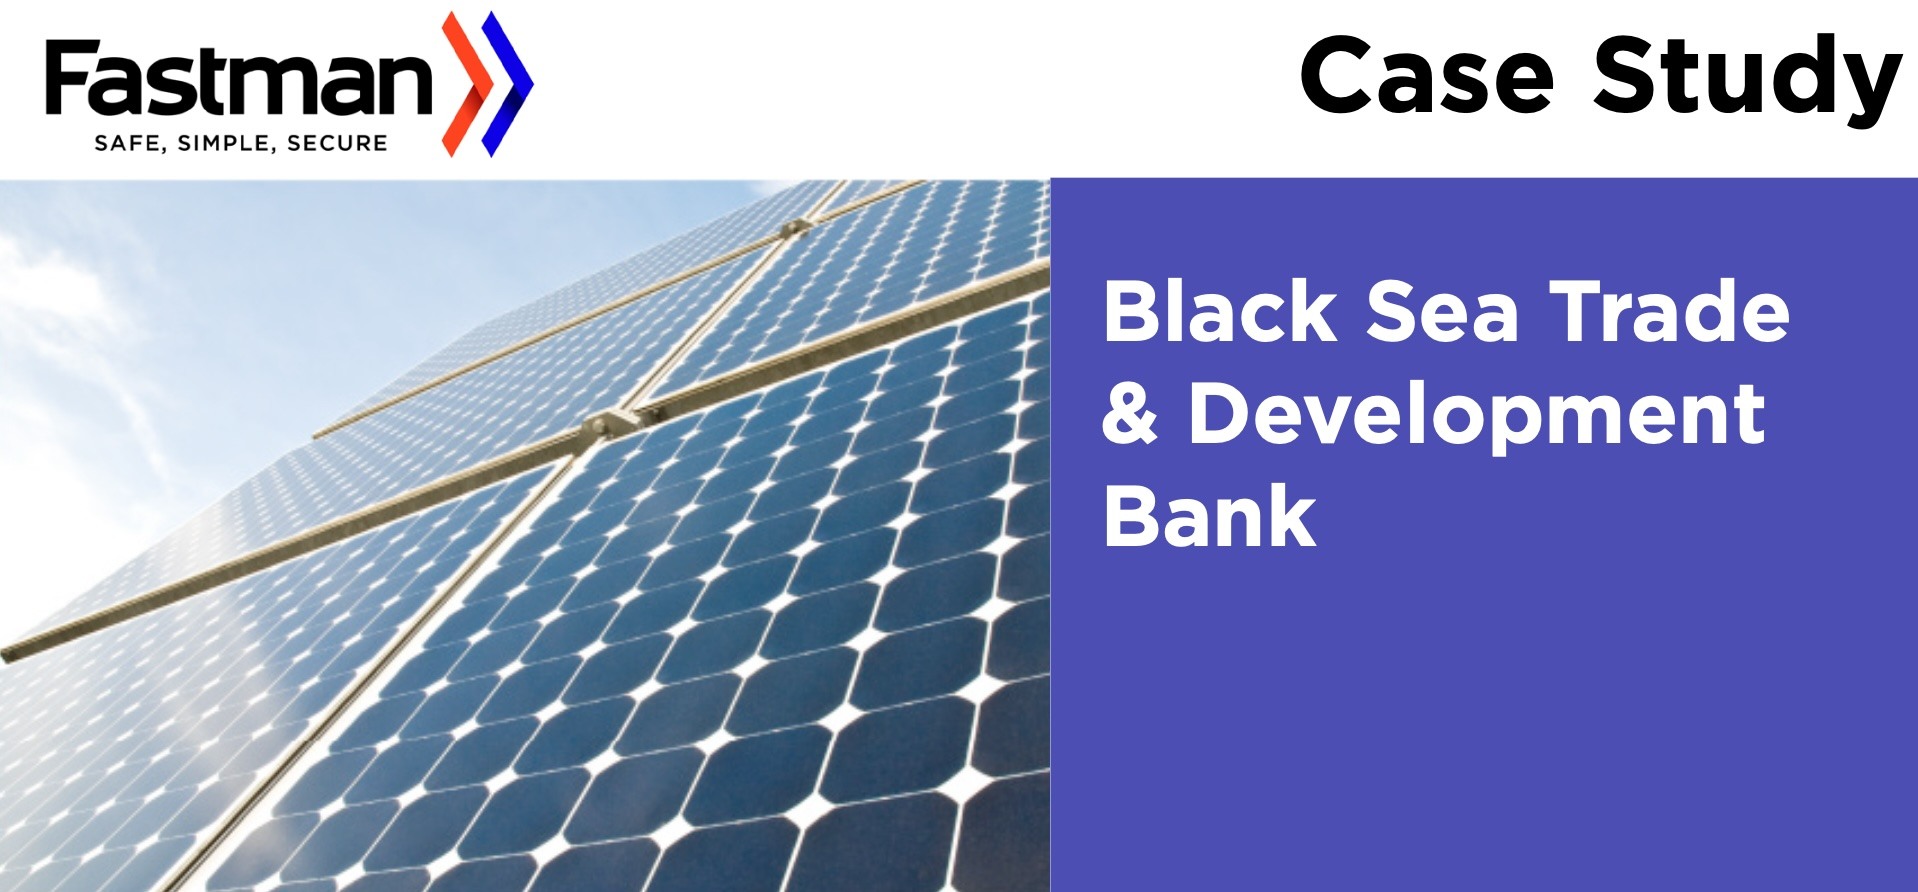 Case-Study_Black-Sea-Trade-Development-Bank-1-705x478